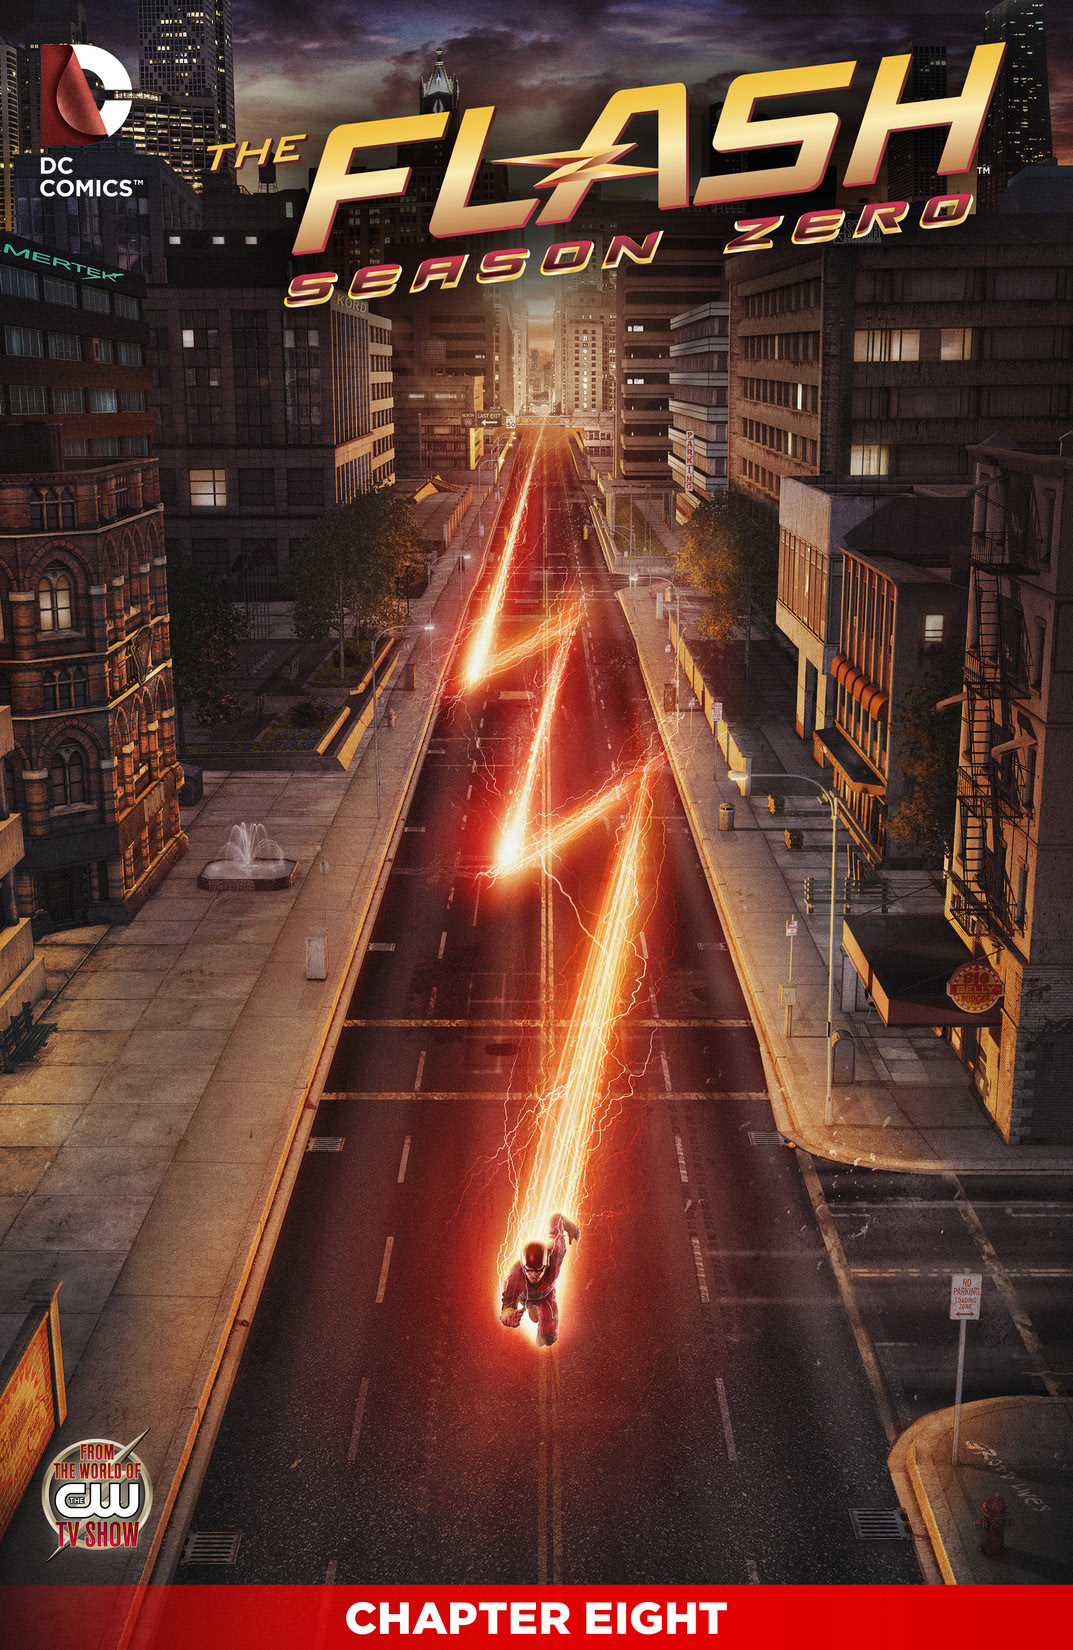 The Flash: Season Zero #8 preview images